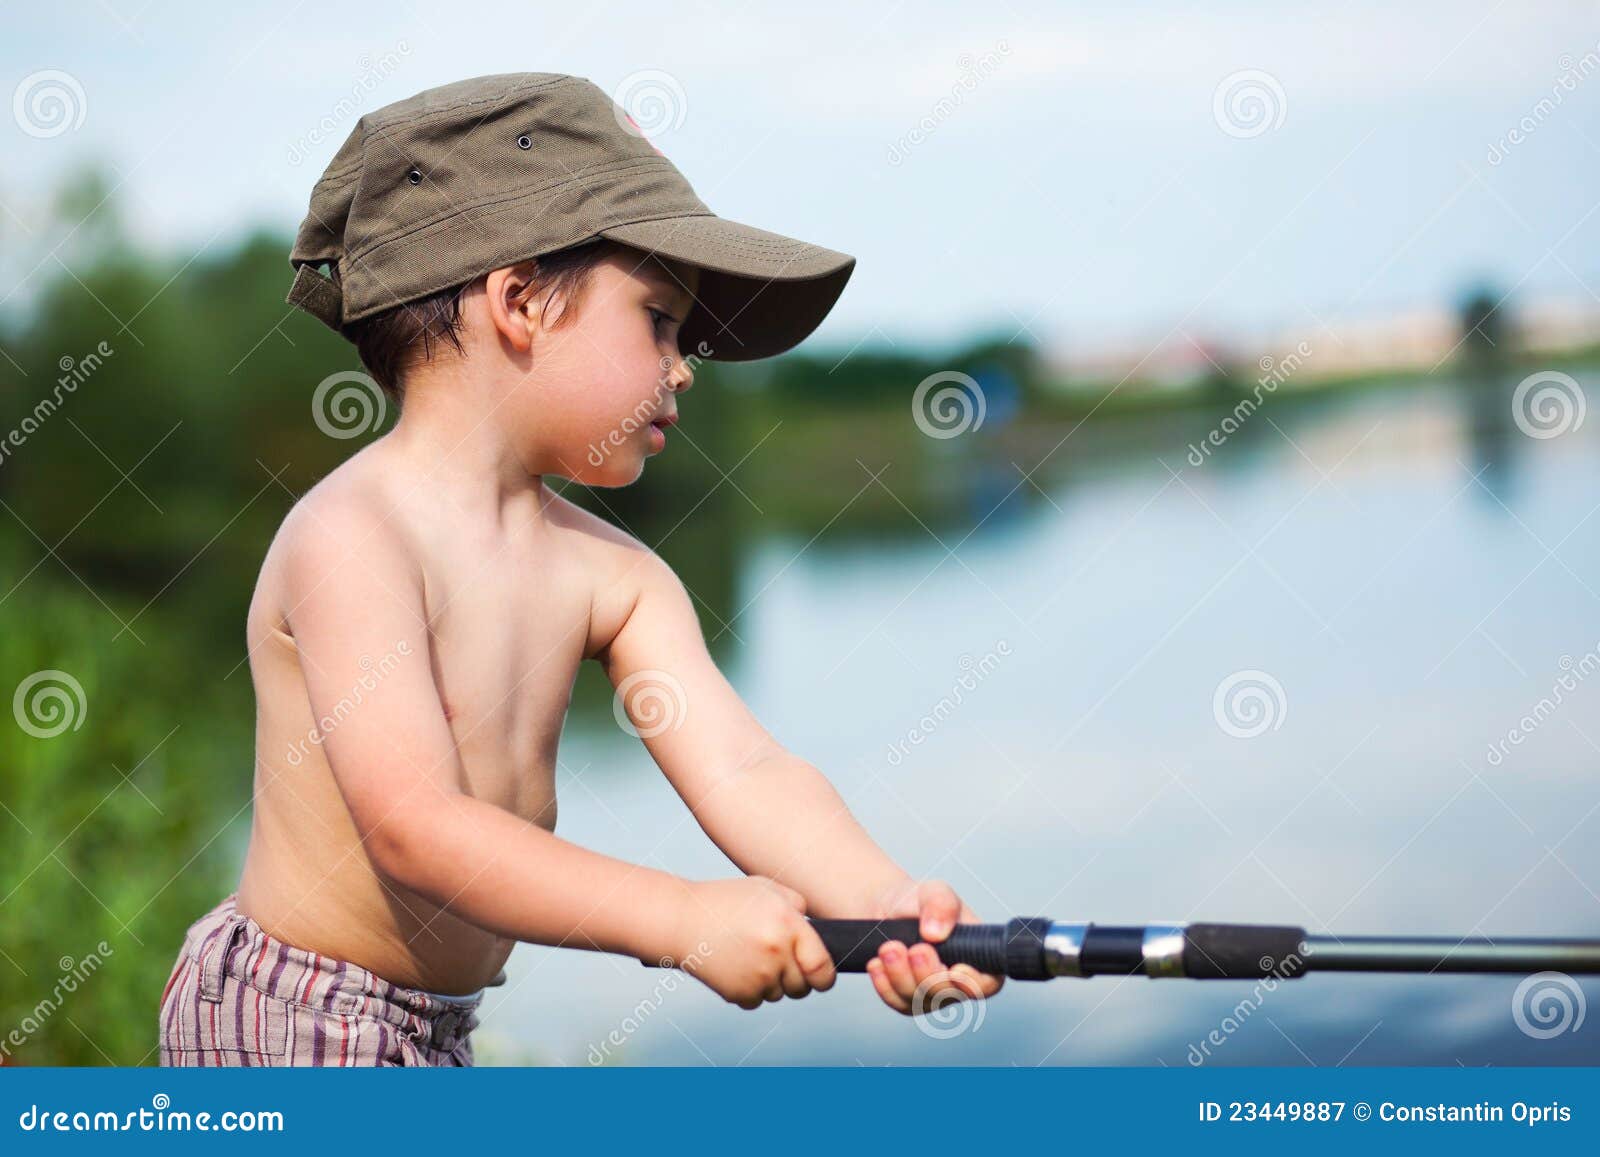 1,771 Child Holding Fishing Rod Stock Photos - Free & Royalty-Free